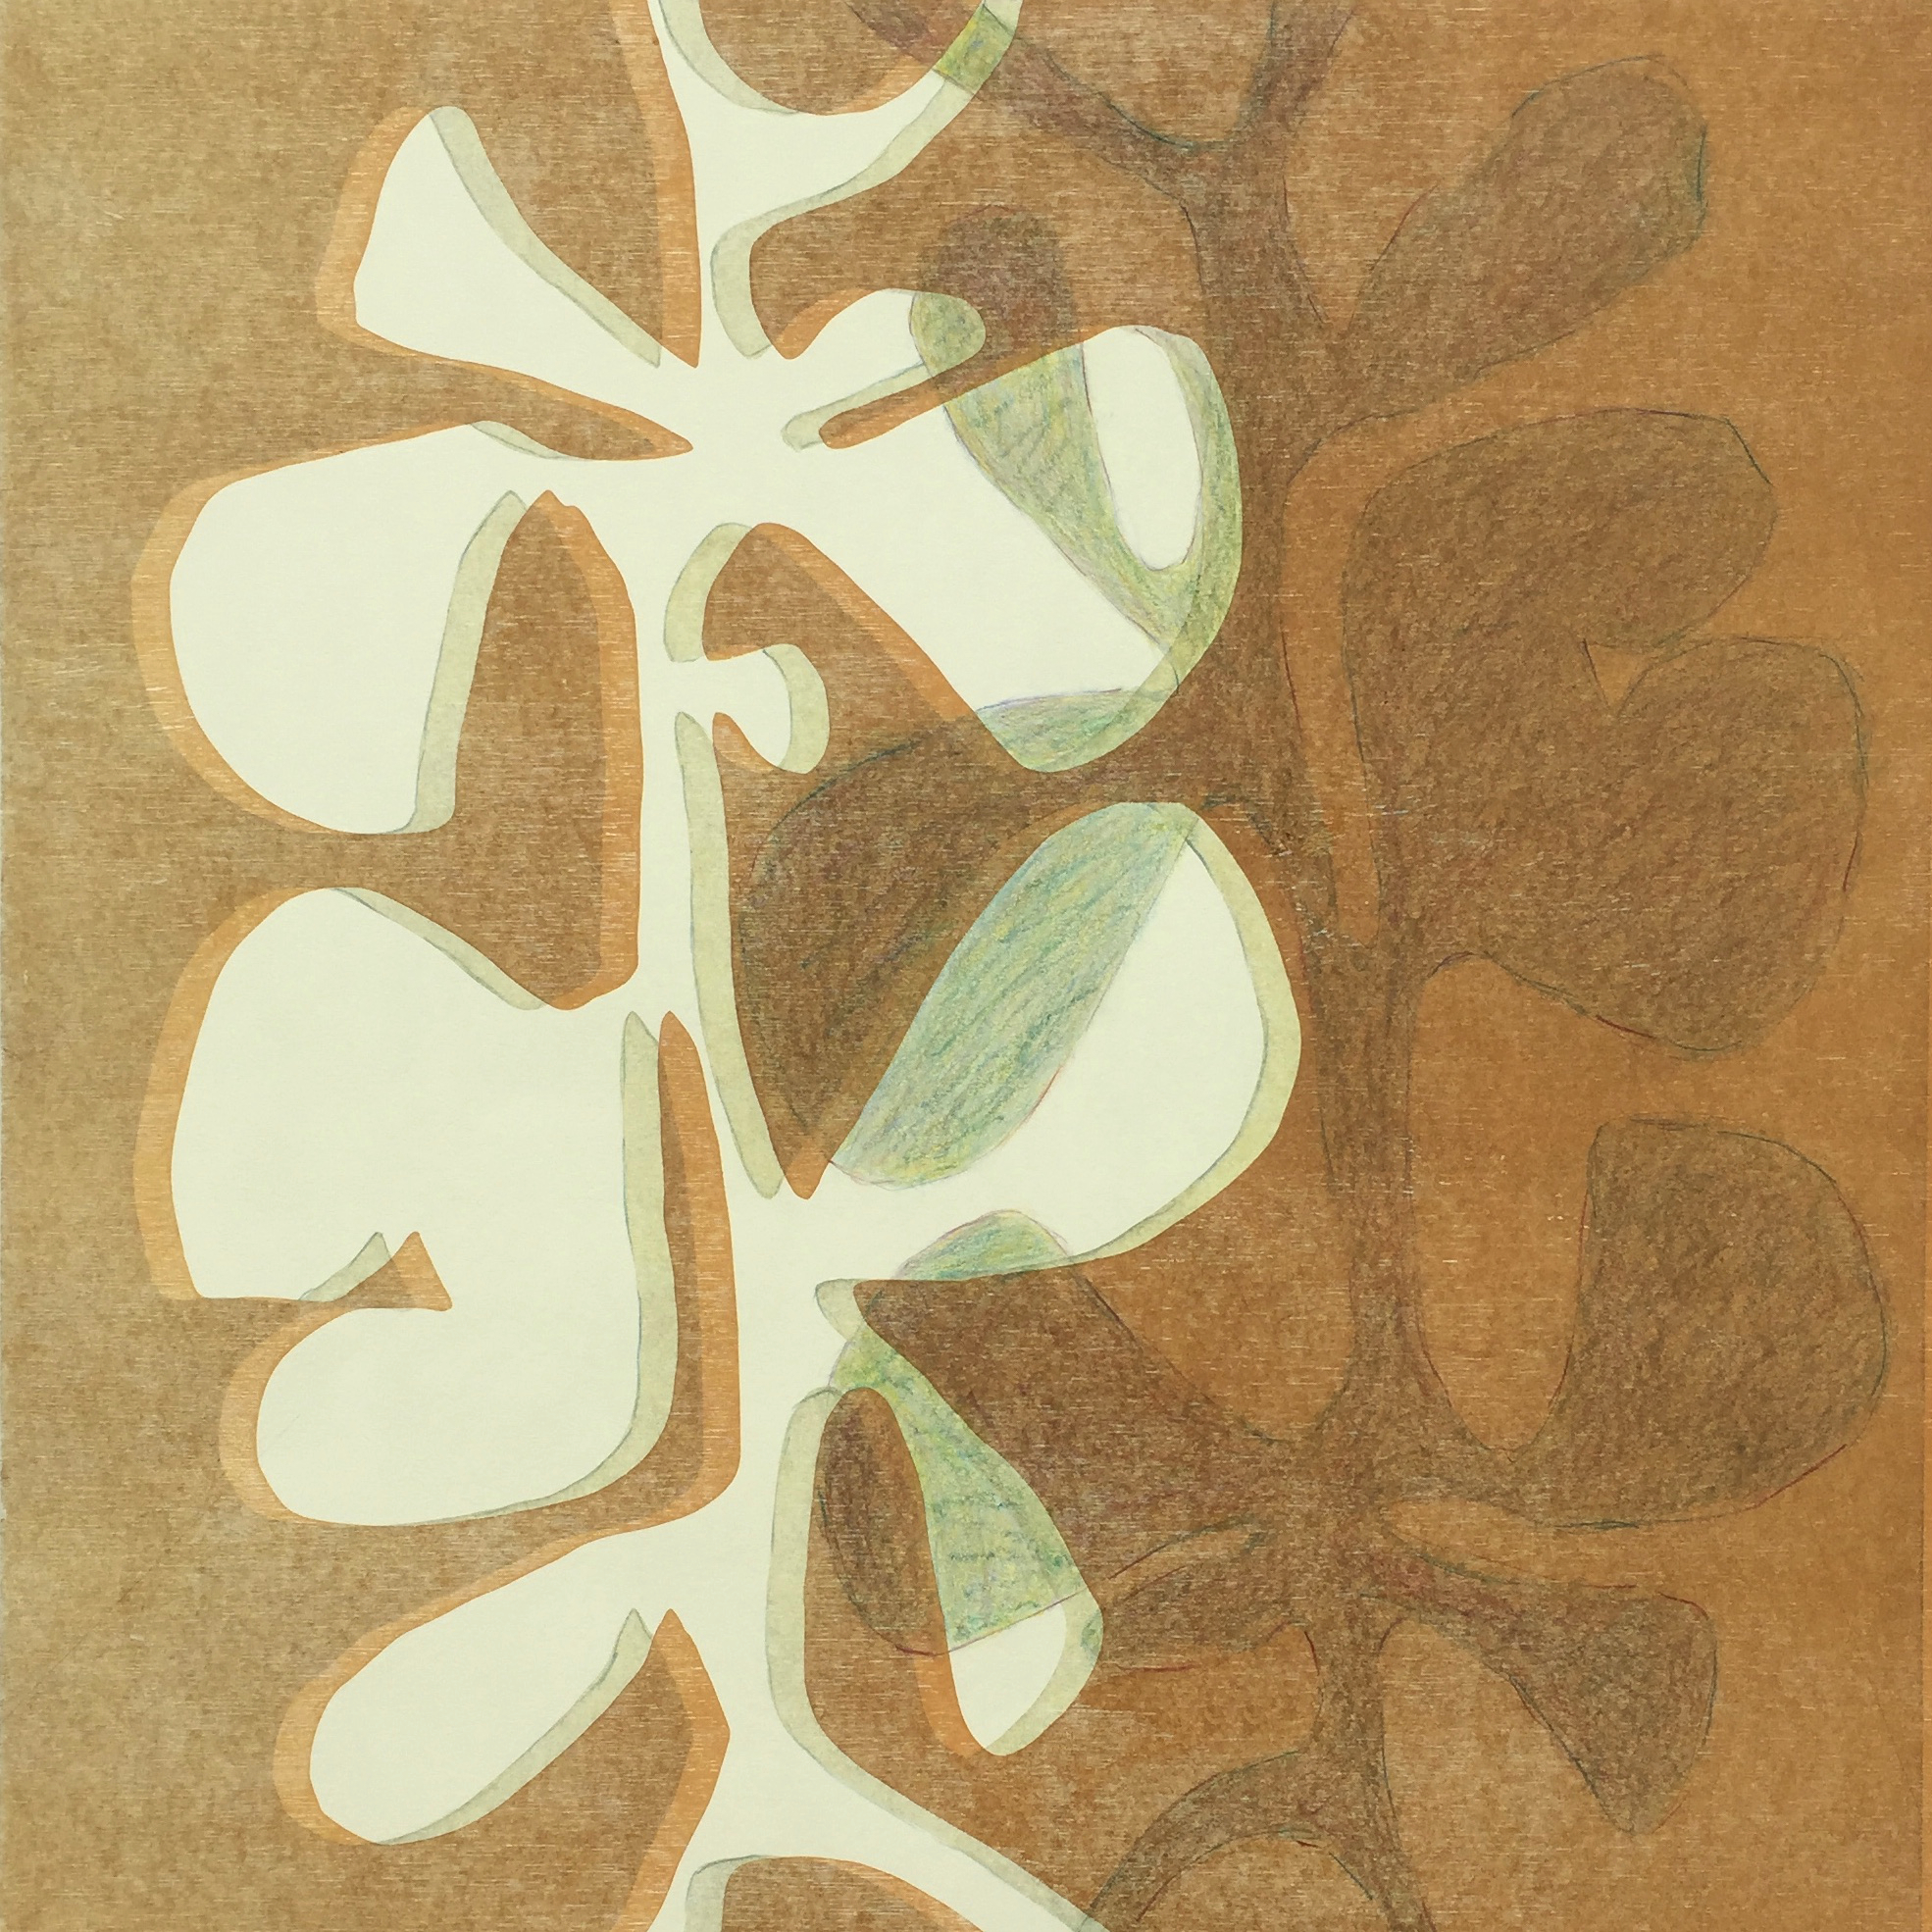 Bauhaus Botanical - Ginger/Sage/Shadow Teal: created by Monica Monaghan-Milstein for MonicaArts Design LLC